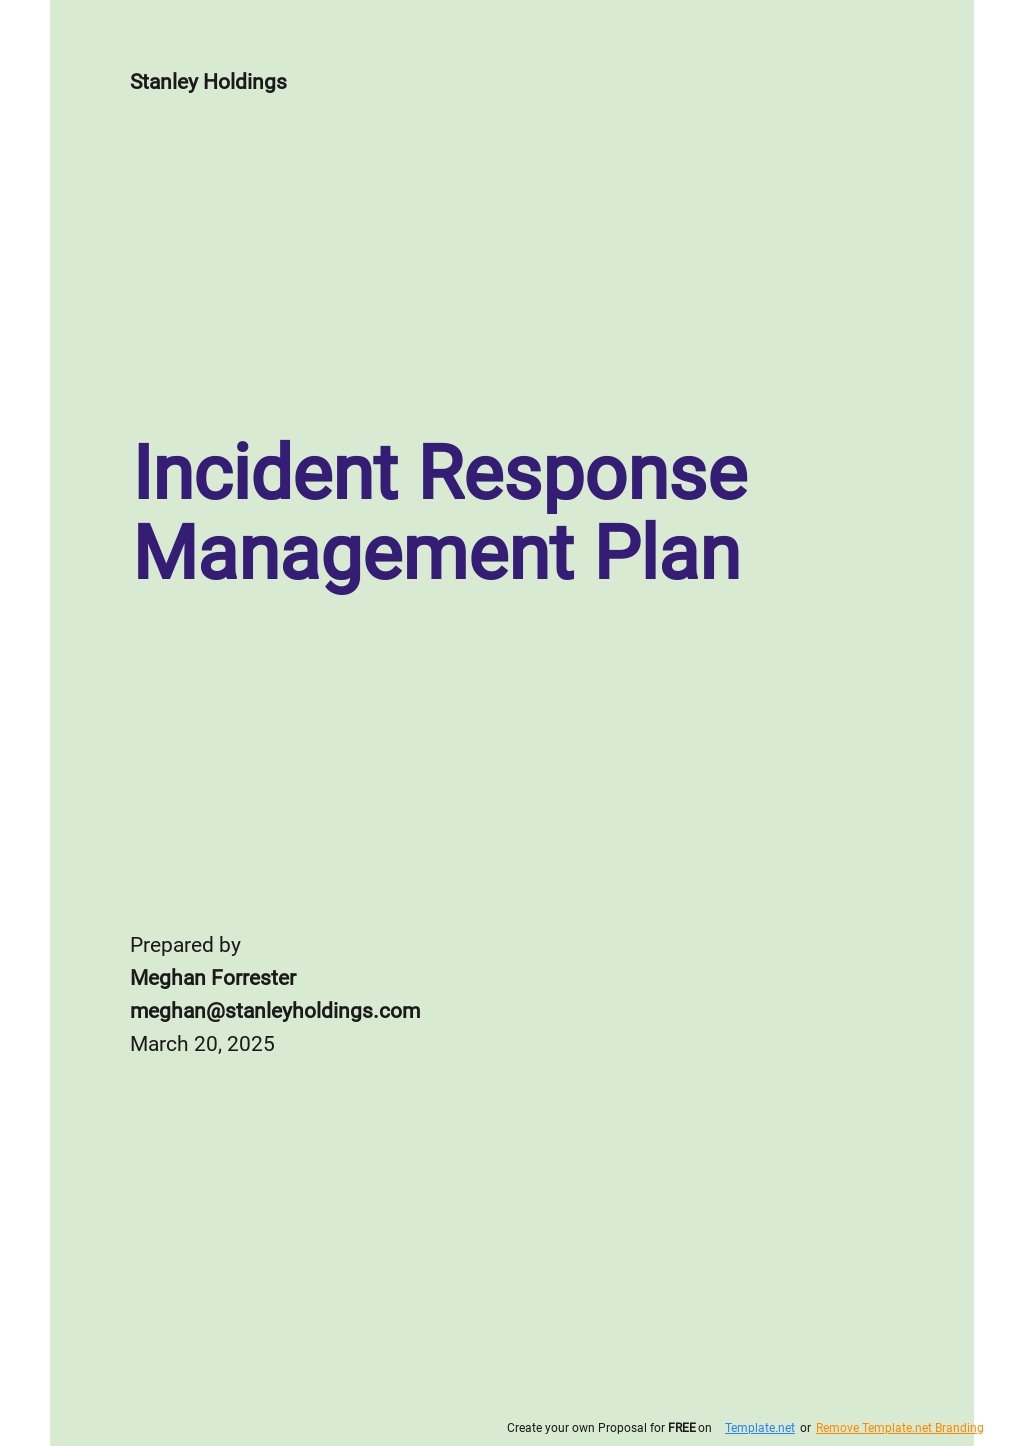 Incident Response Management Plan Template